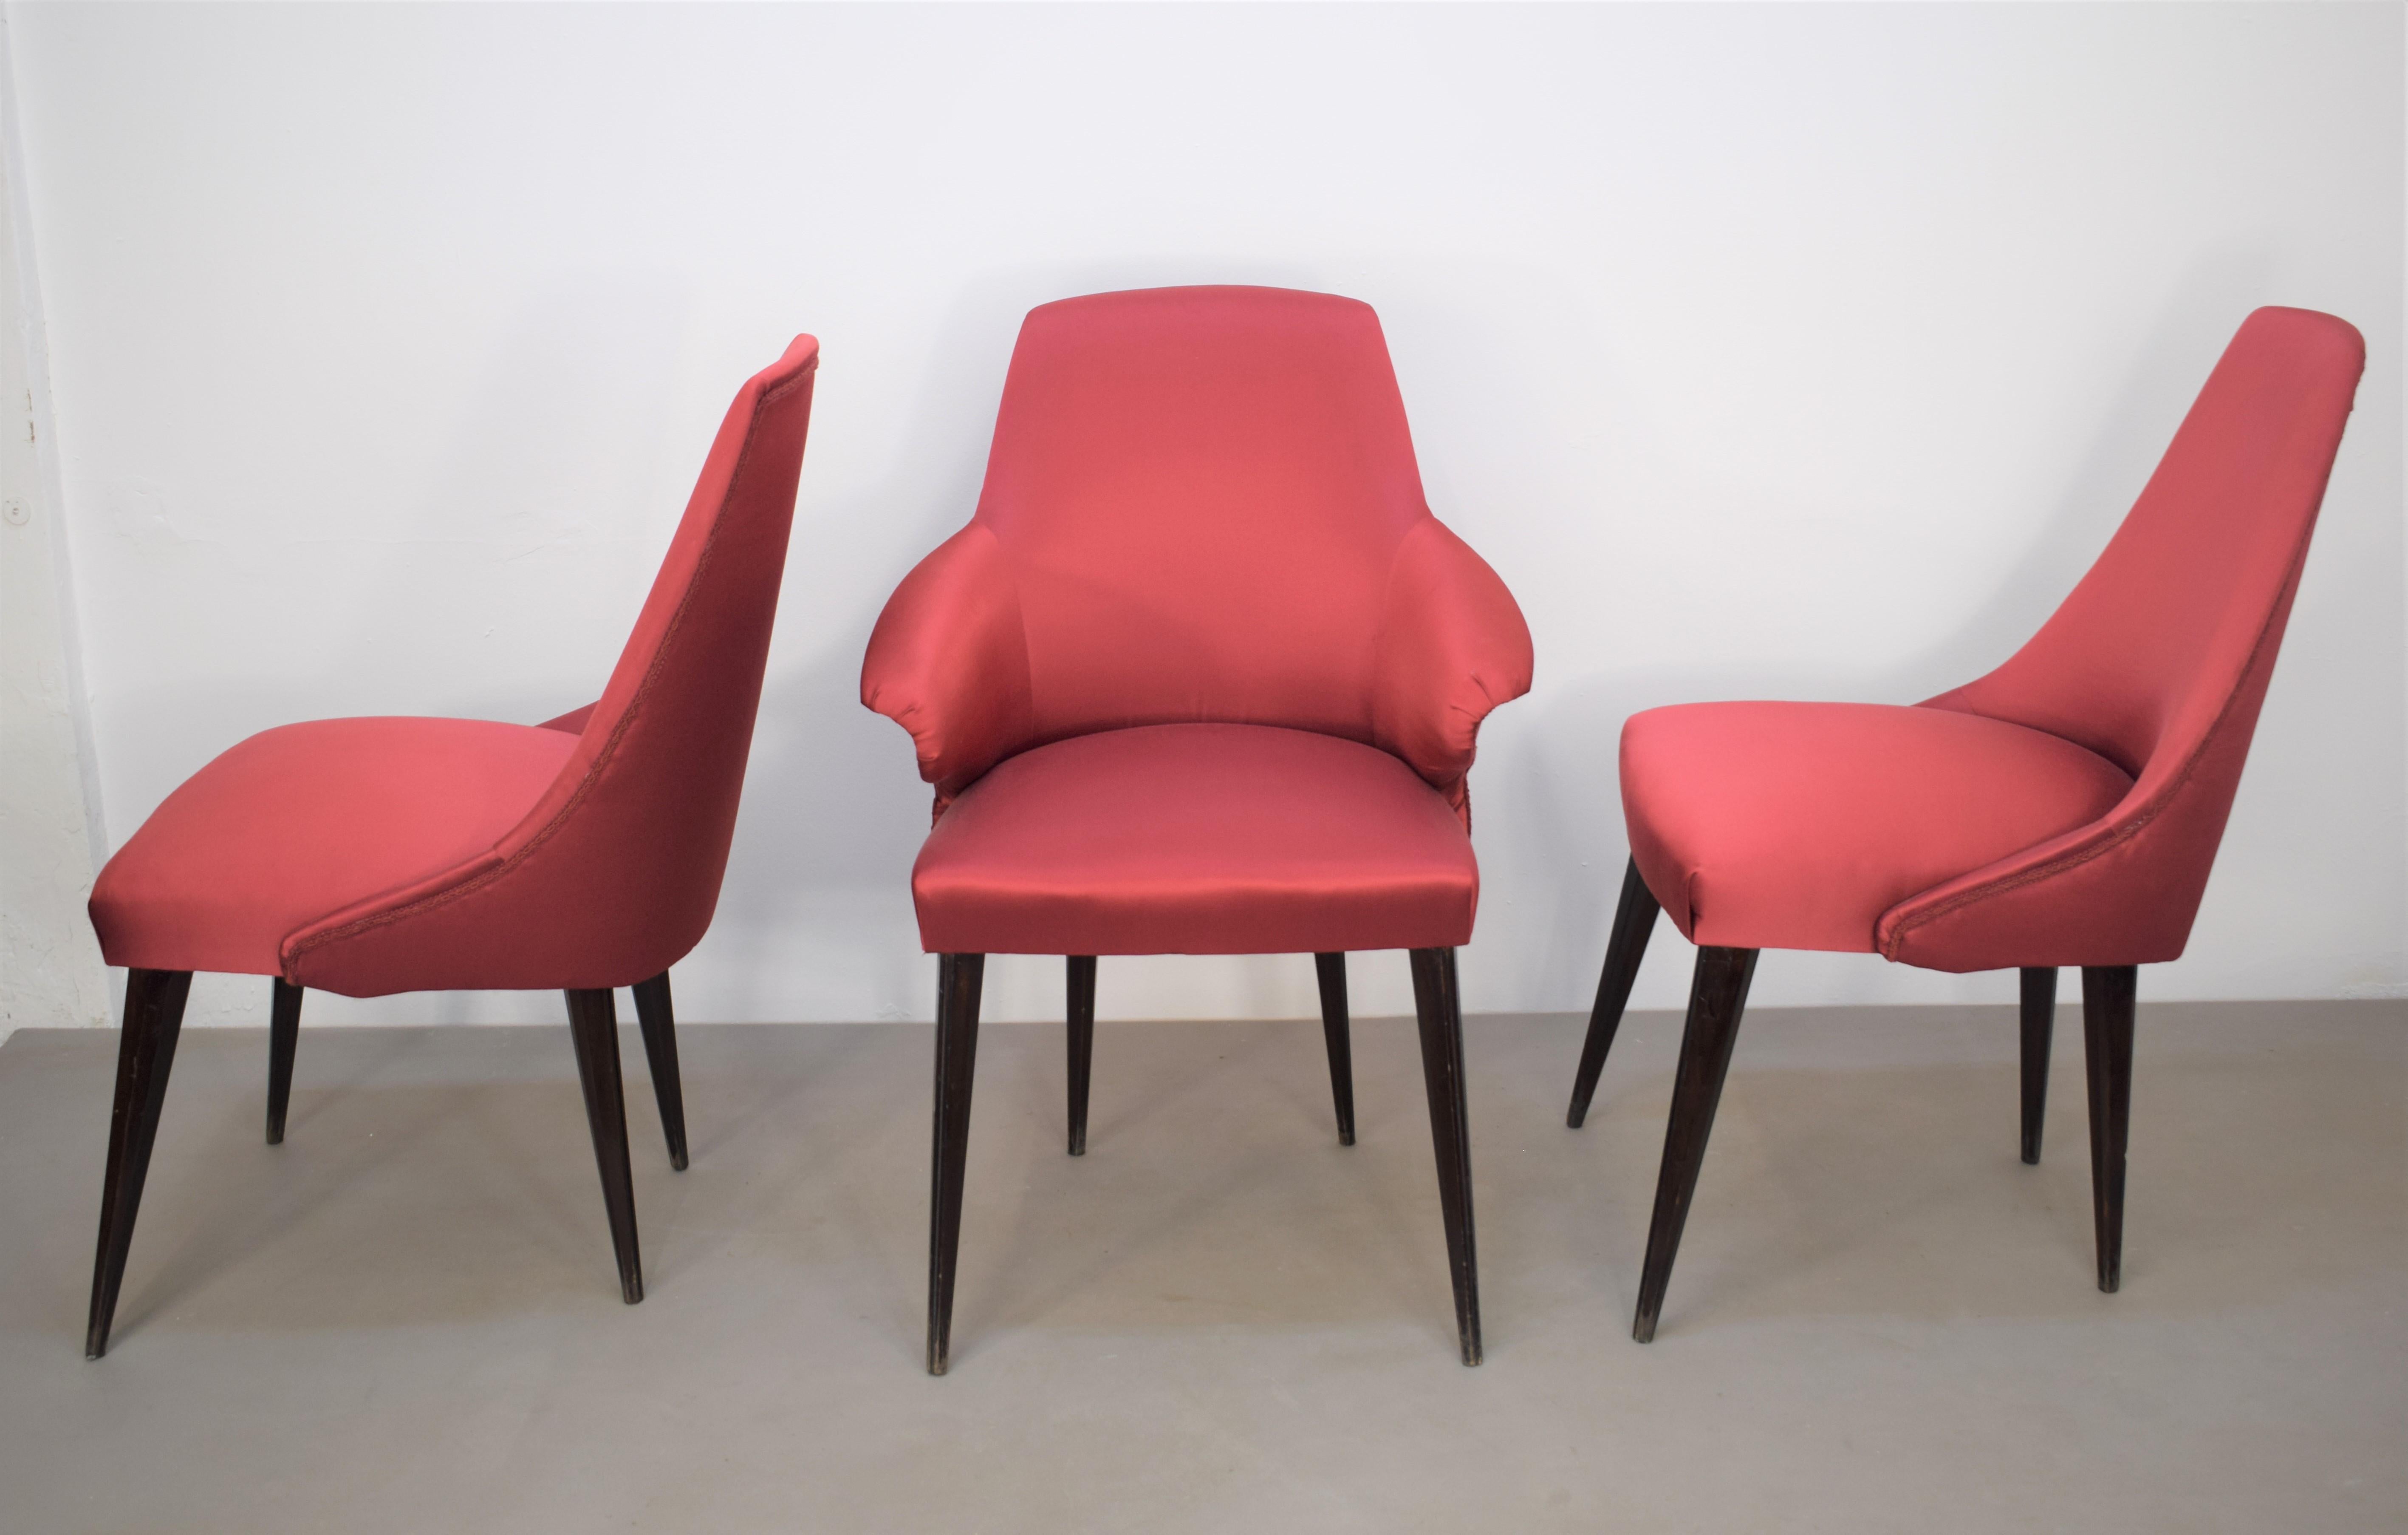 Set of 3 Italian chairs, Osvaldo Borsani style, 1960s.
Dimensions: chairs H= 90 cm; W= 50 cm; D= 65 cm; Height seat = 48 cm.
Armchairs H= 90 cm; W= 60 cm; D= 67 cm; Height seat= 48 cm.